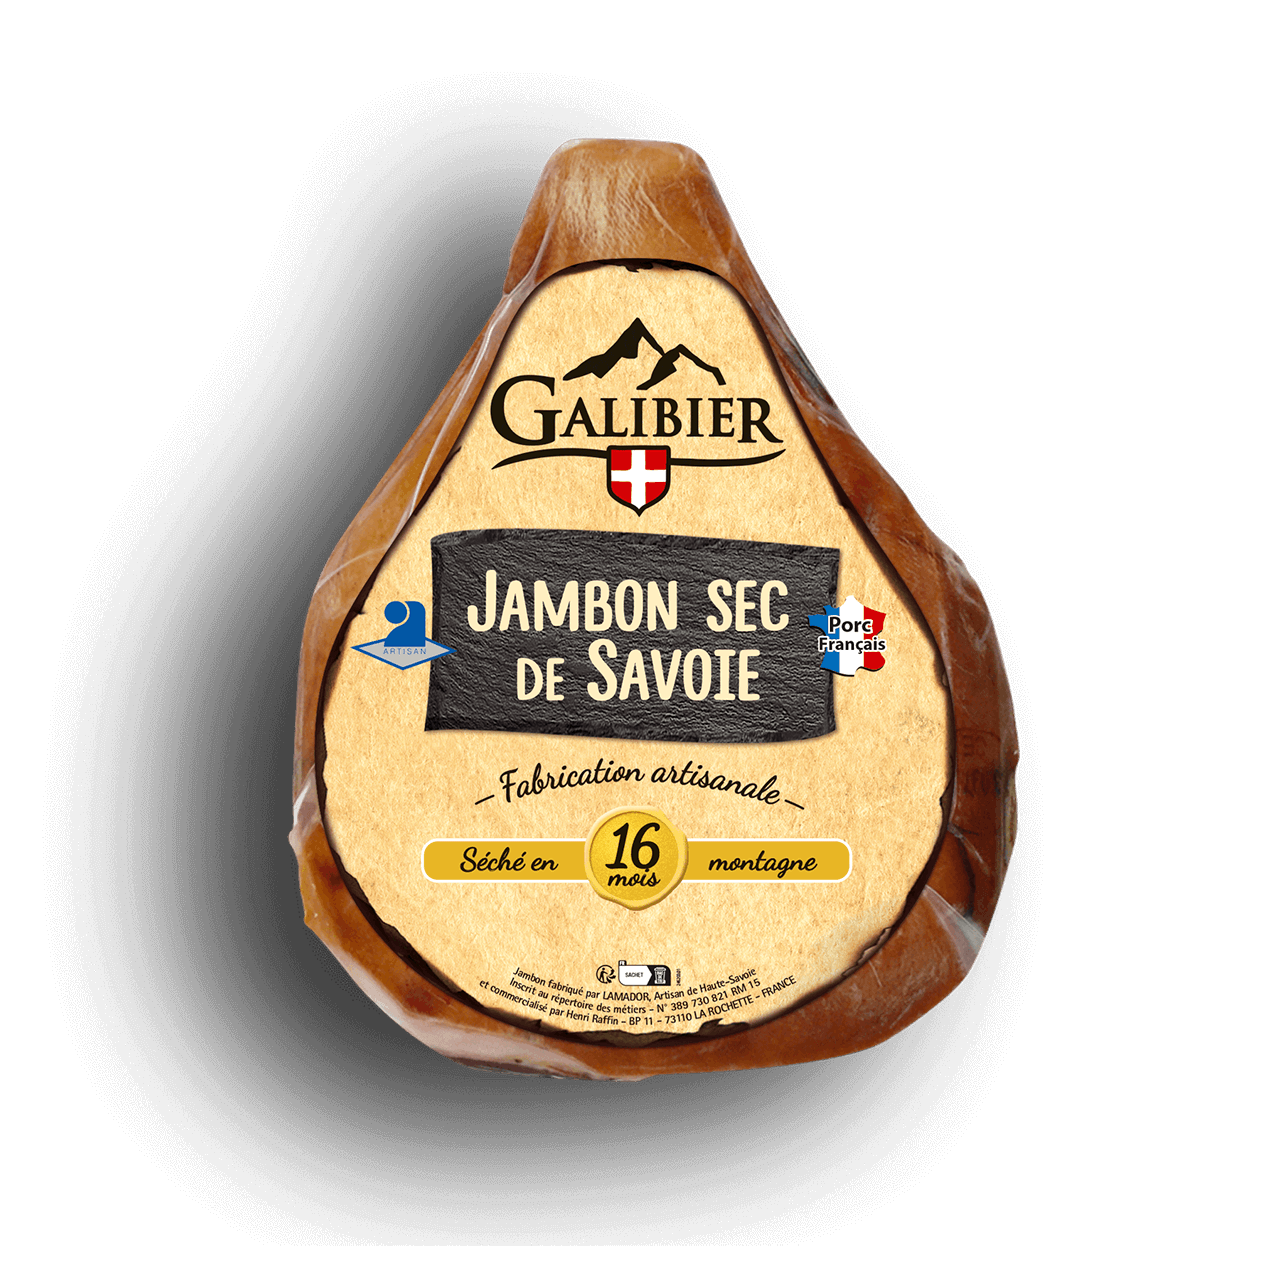 Galibier - Jambon Secs de Savoie